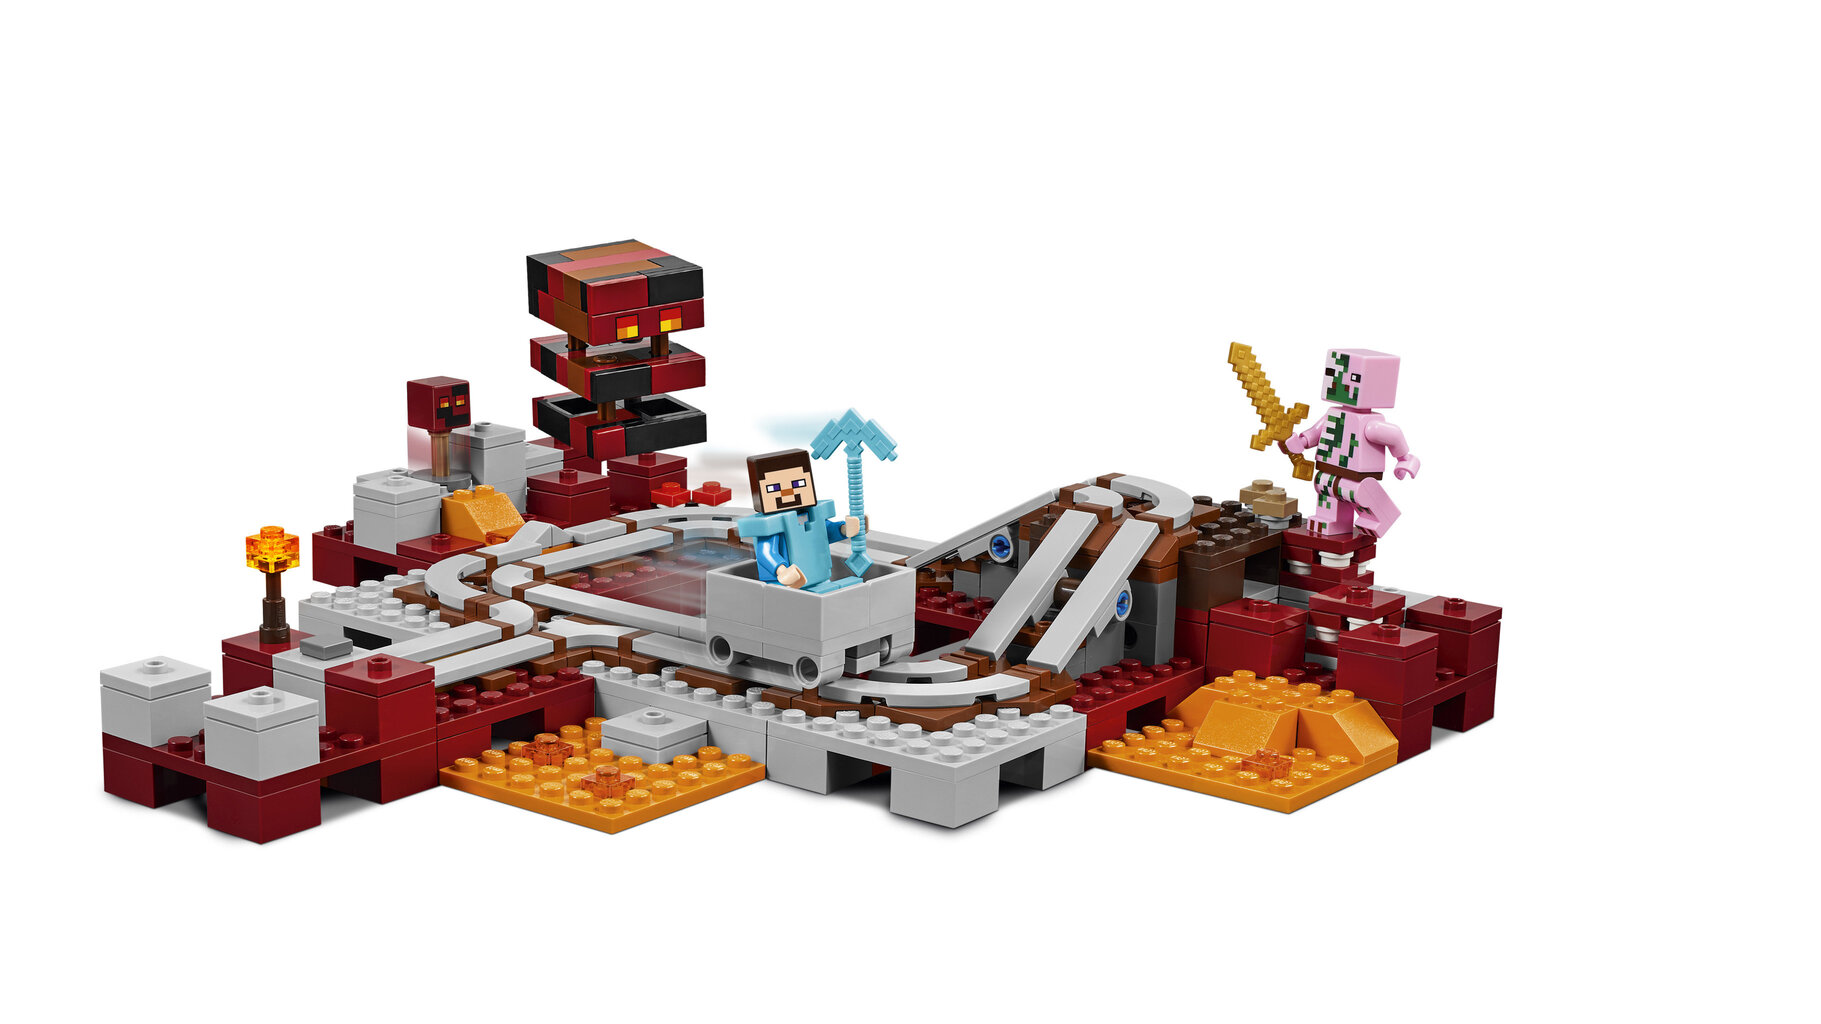 21130 LEGO® Minecraft The Nether geležinkelis kaina ir informacija | Konstruktoriai ir kaladėlės | pigu.lt